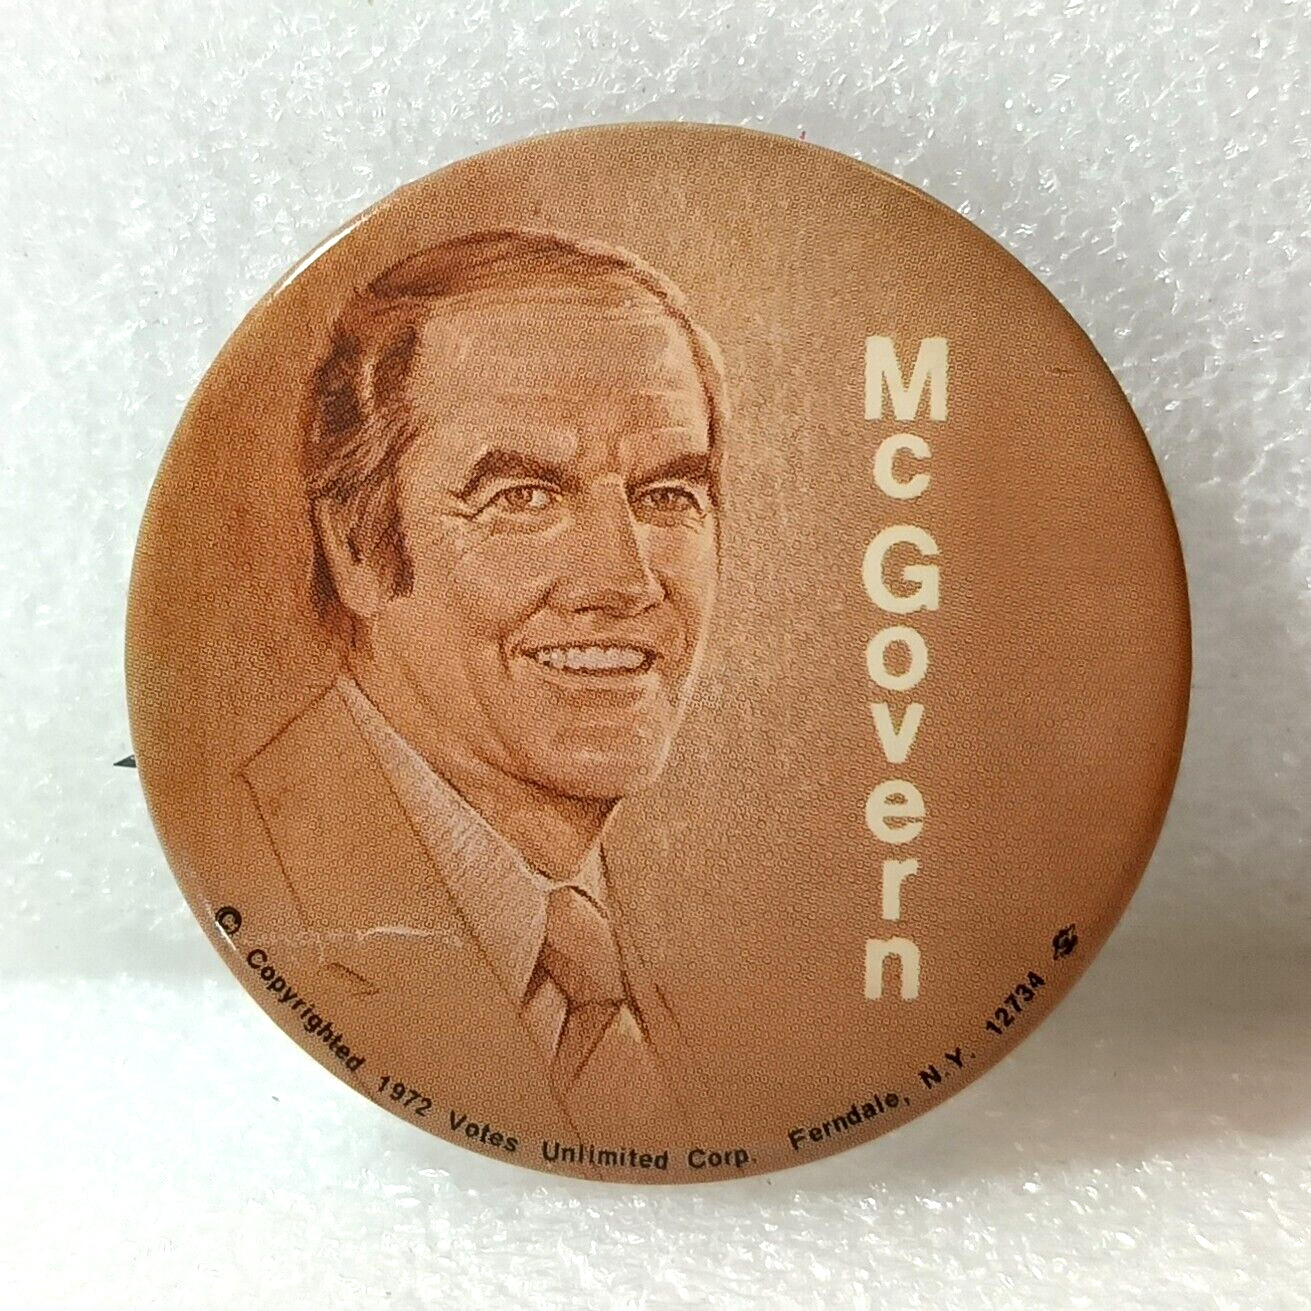 George McGovern 1972 portrait pinback button Presidential Campaign